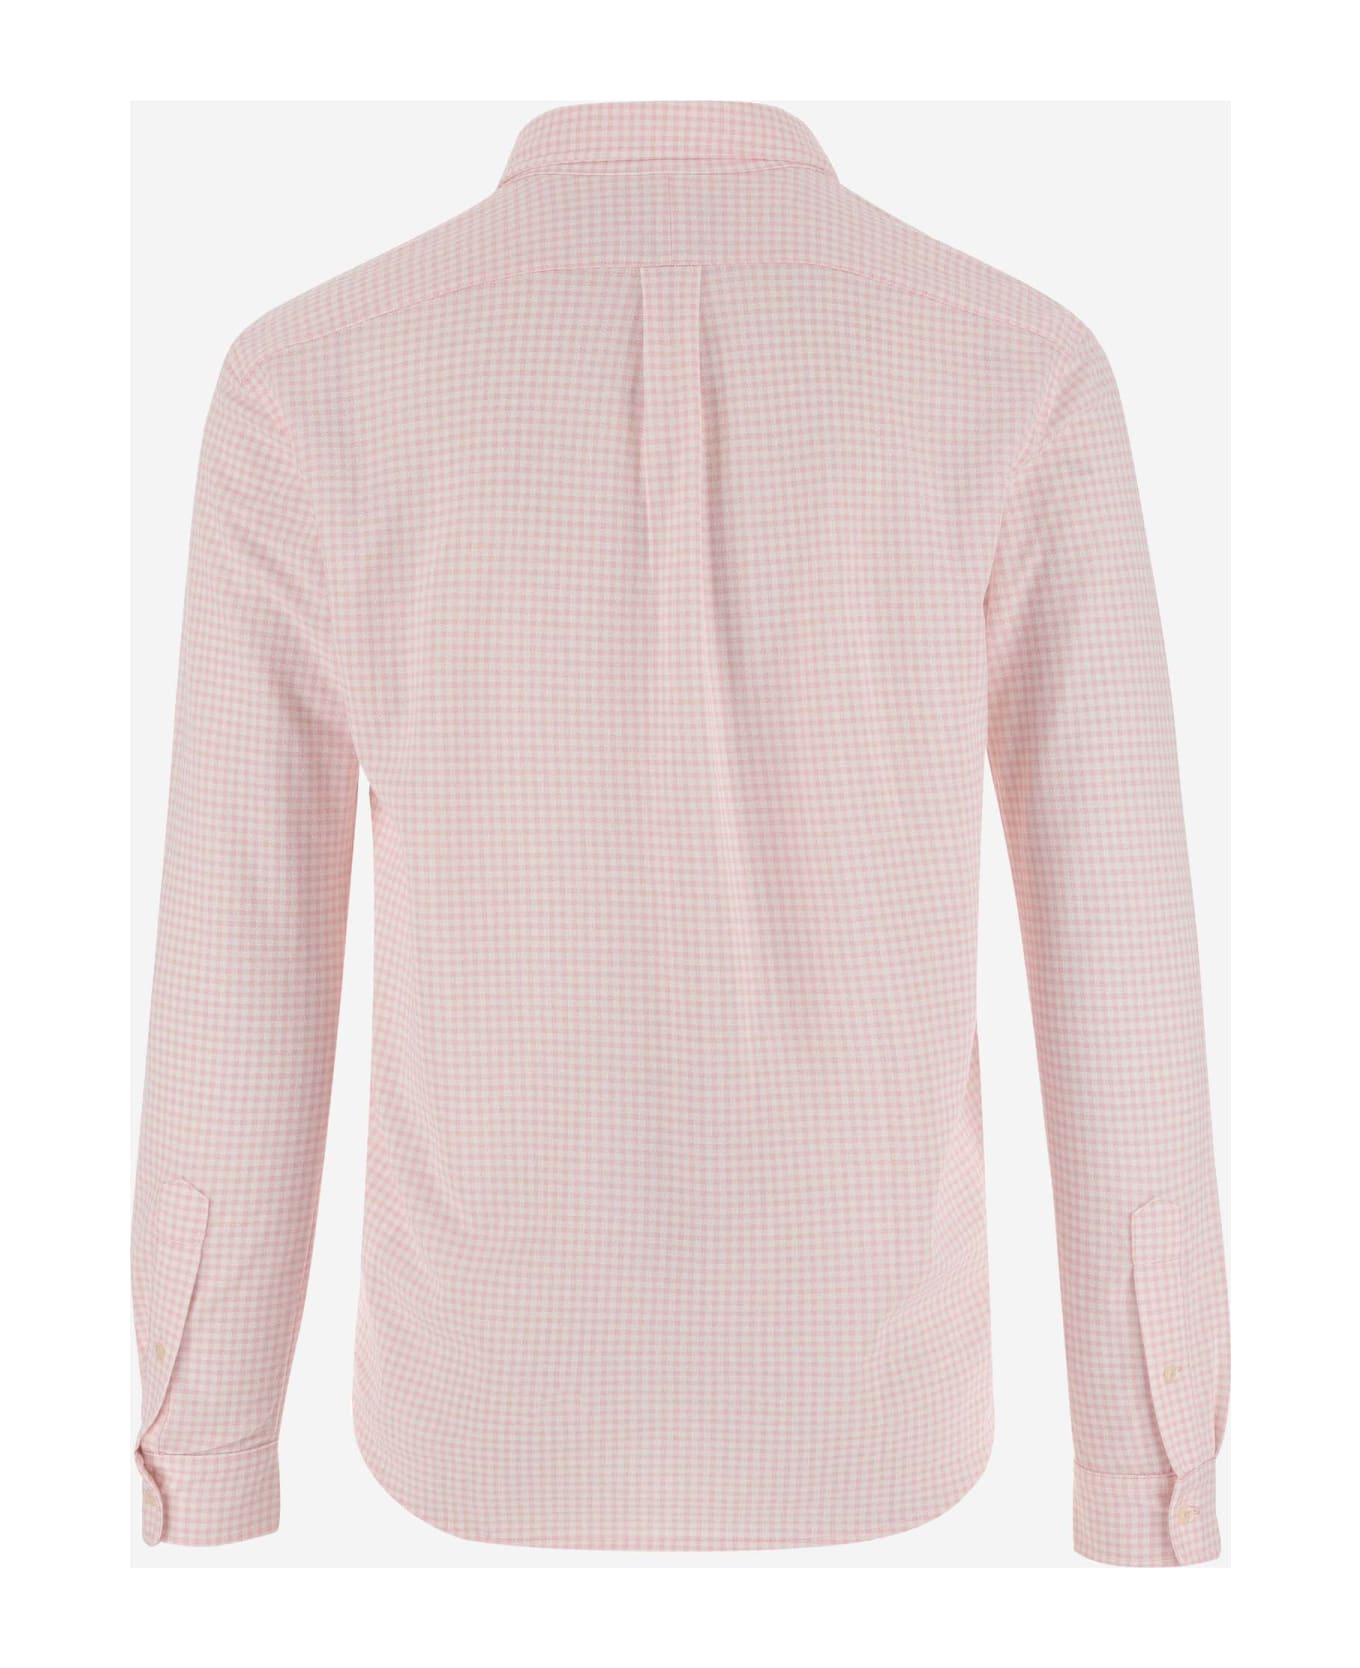 Ralph Lauren Cotton Shirt With Check Pattern - Pink